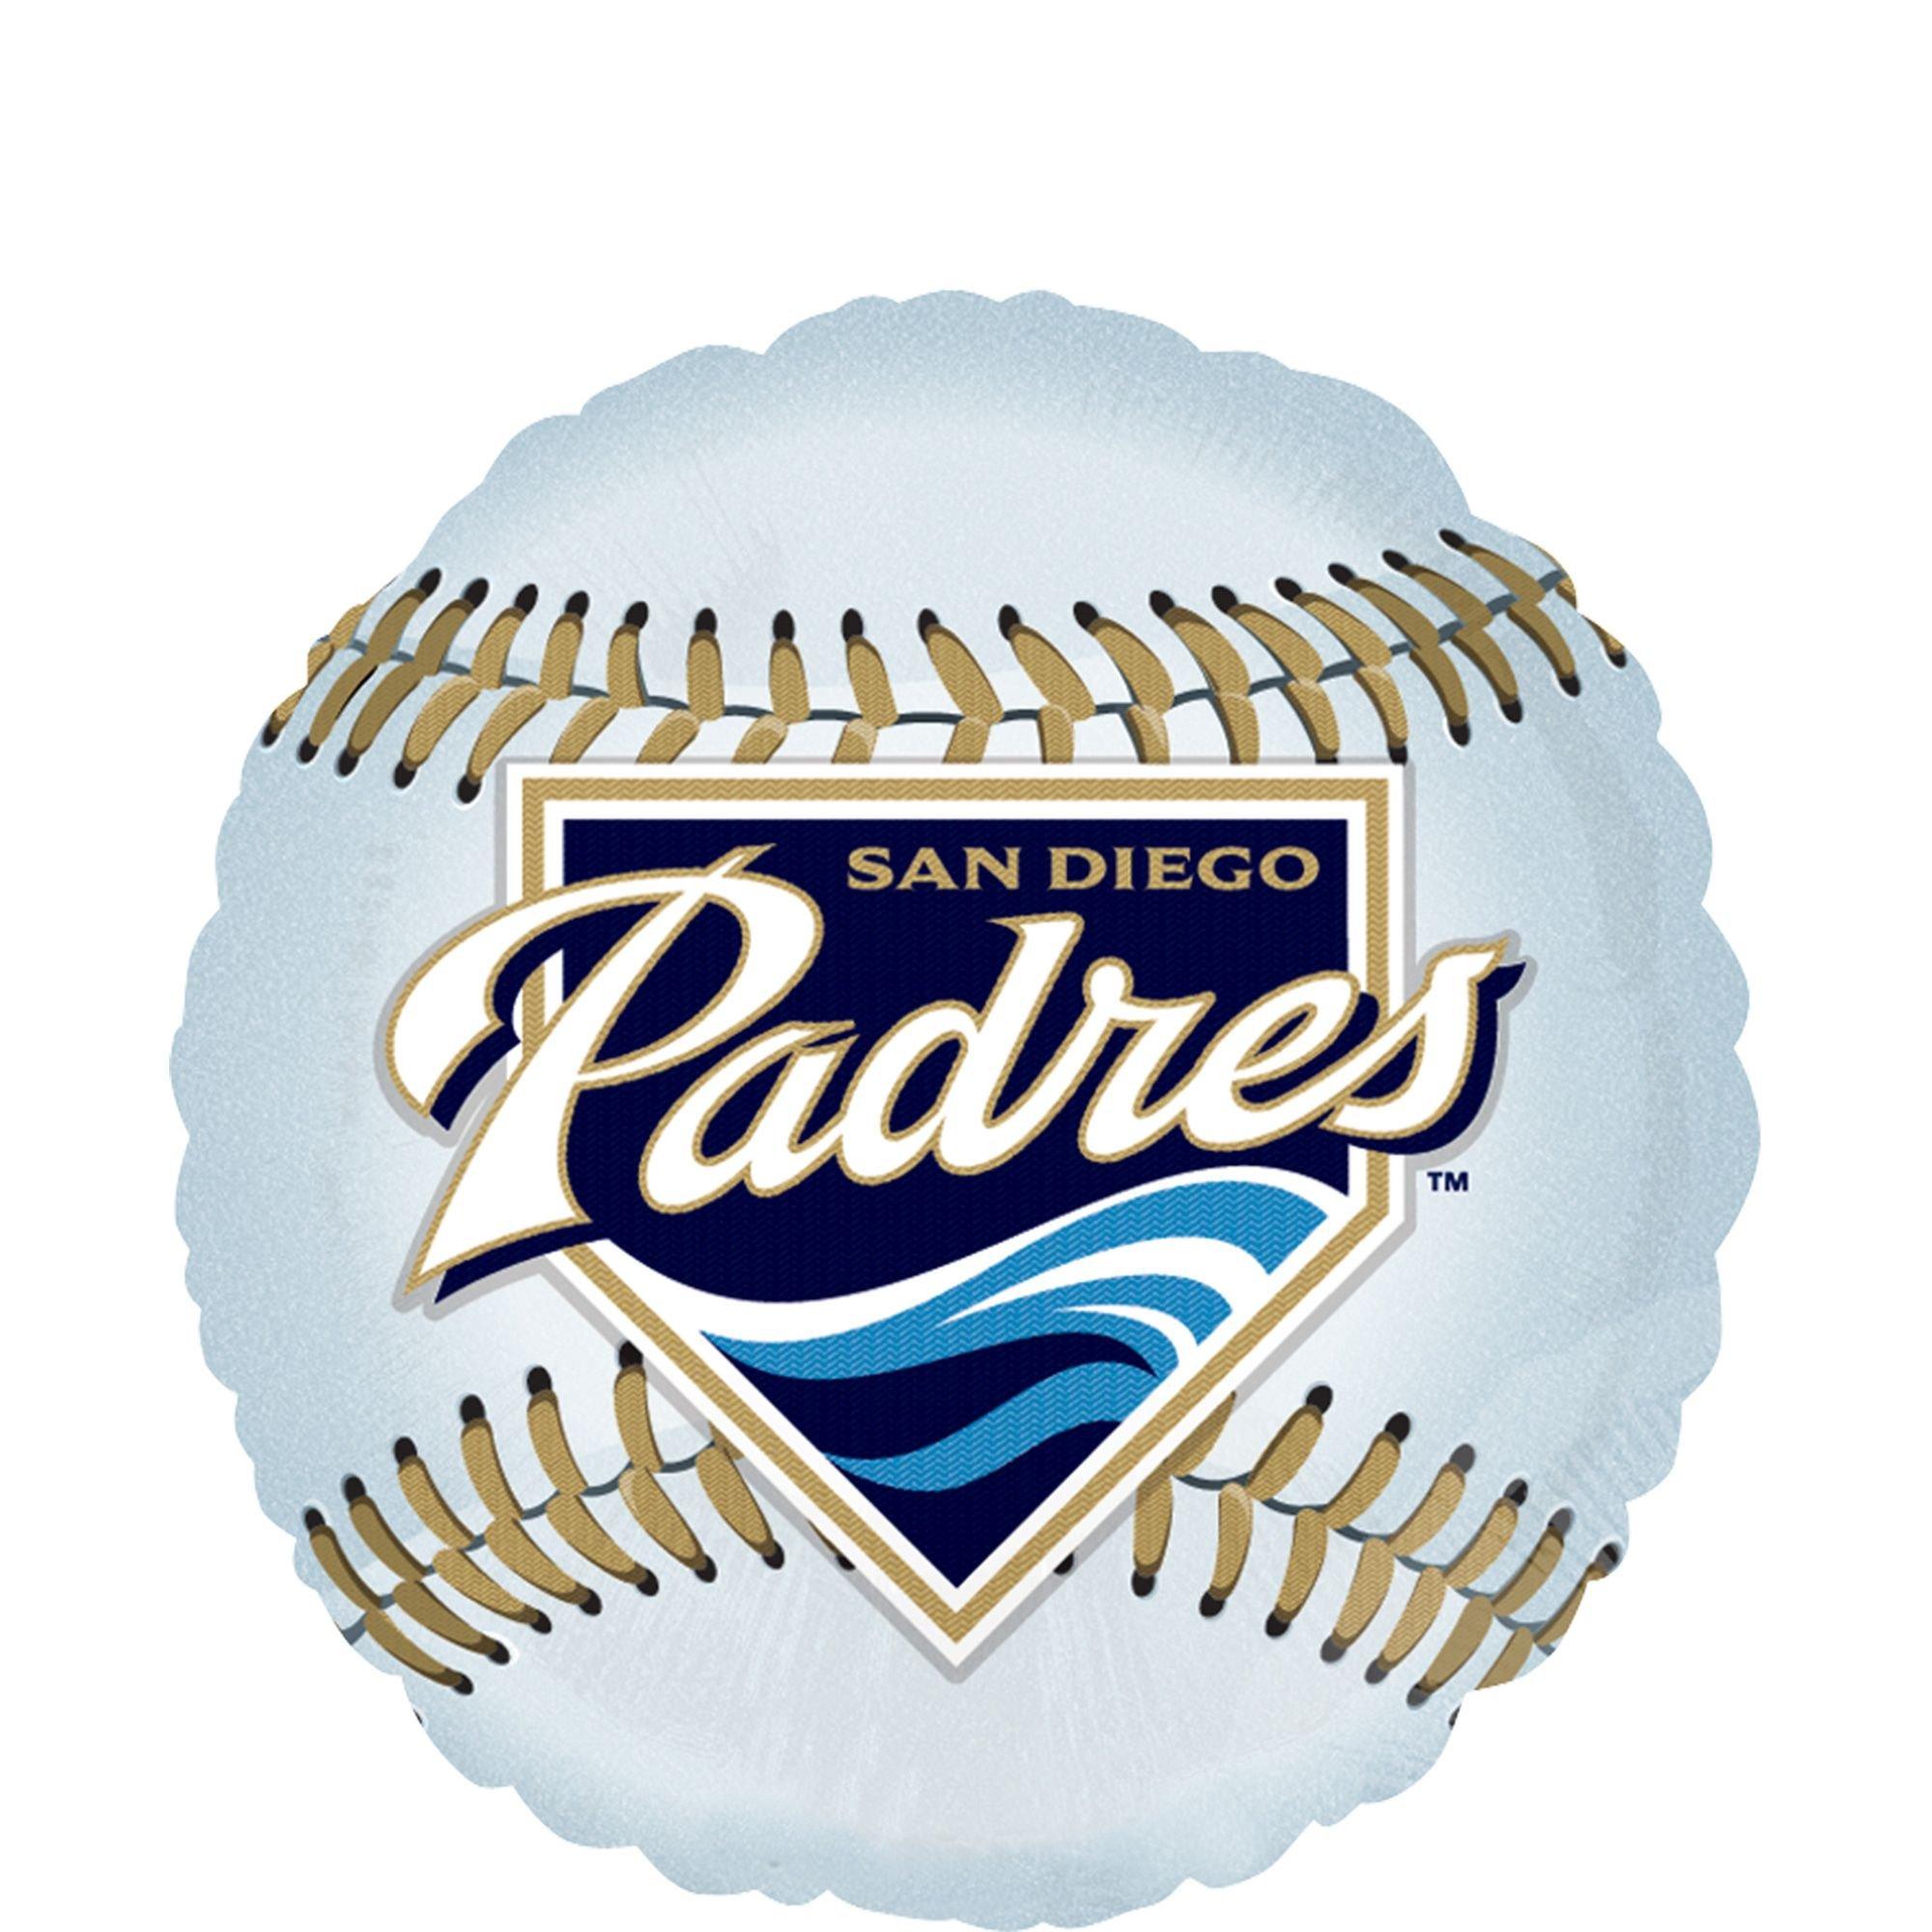 padres baseball logo